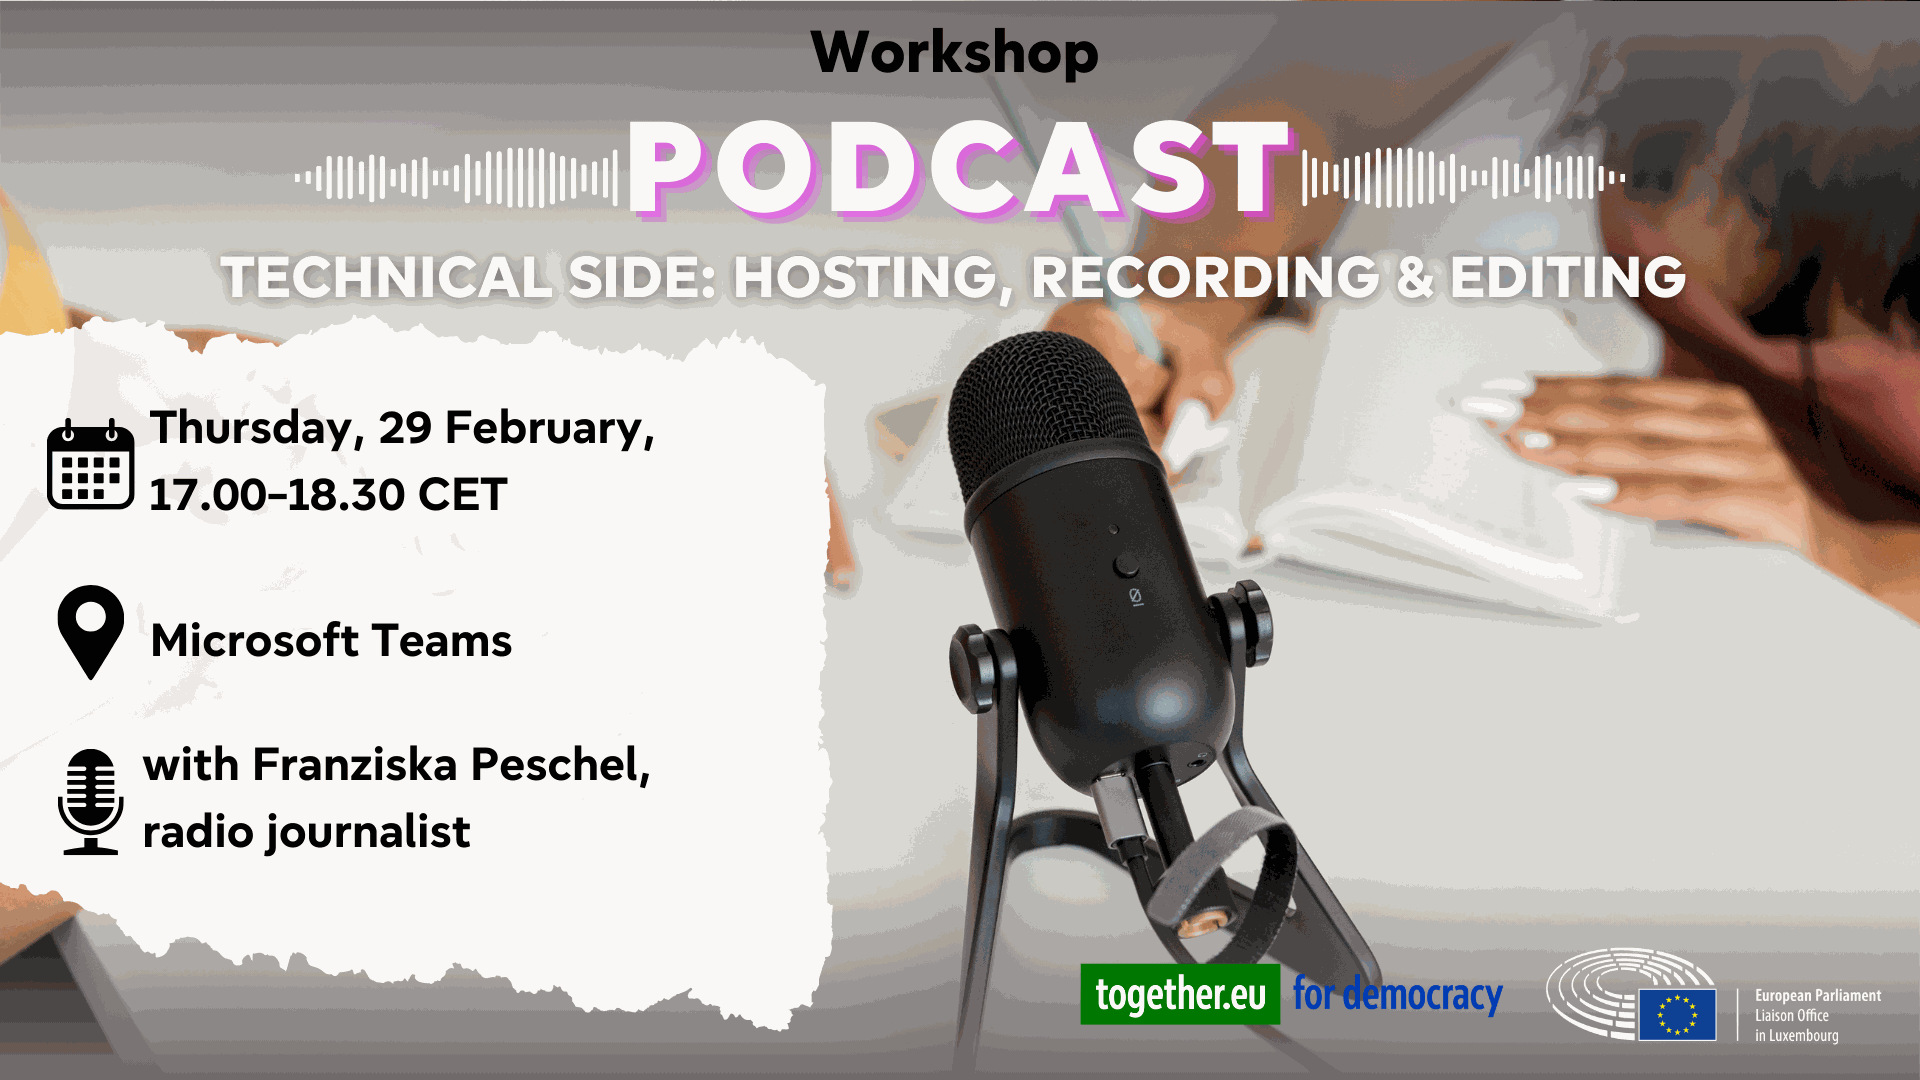 Podcast workshop: hosting, recording & editing